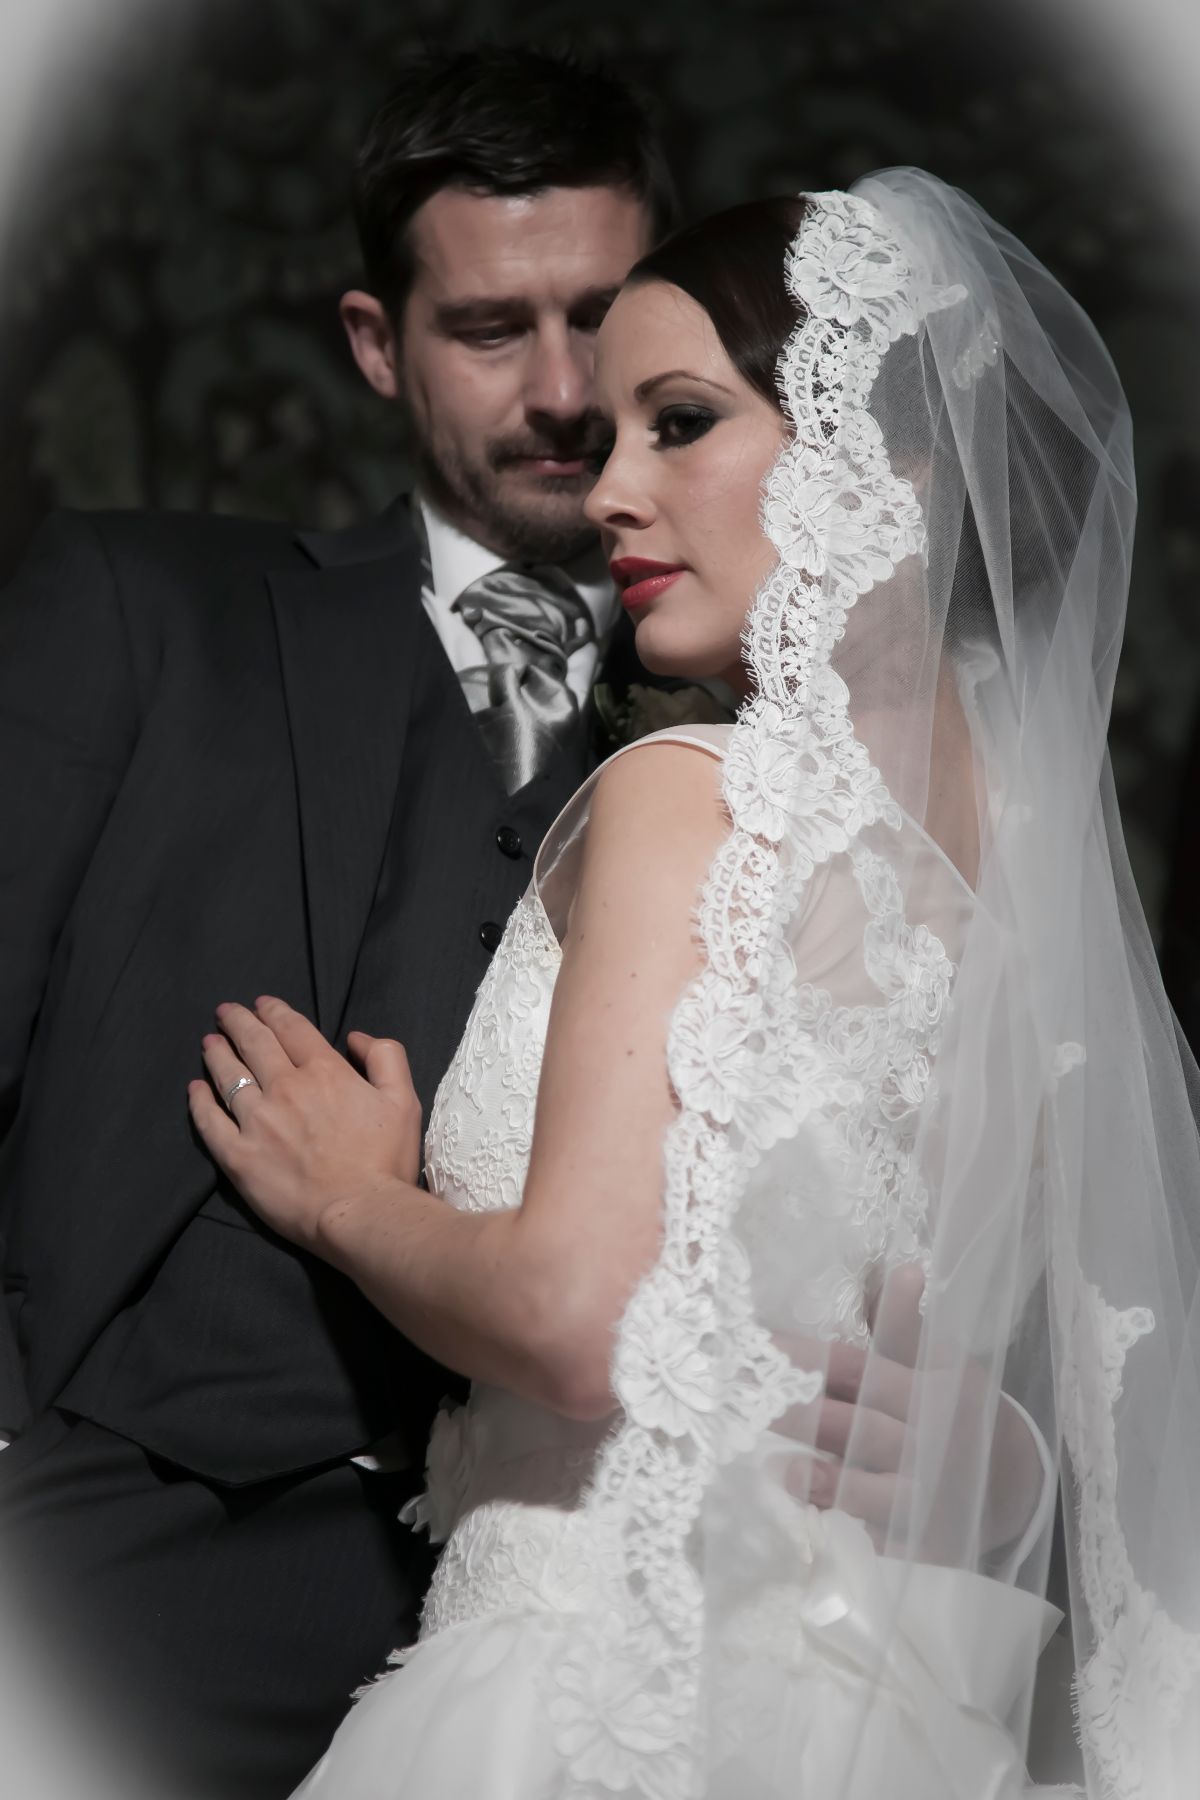 The Photos Of My Wedding-Image-3